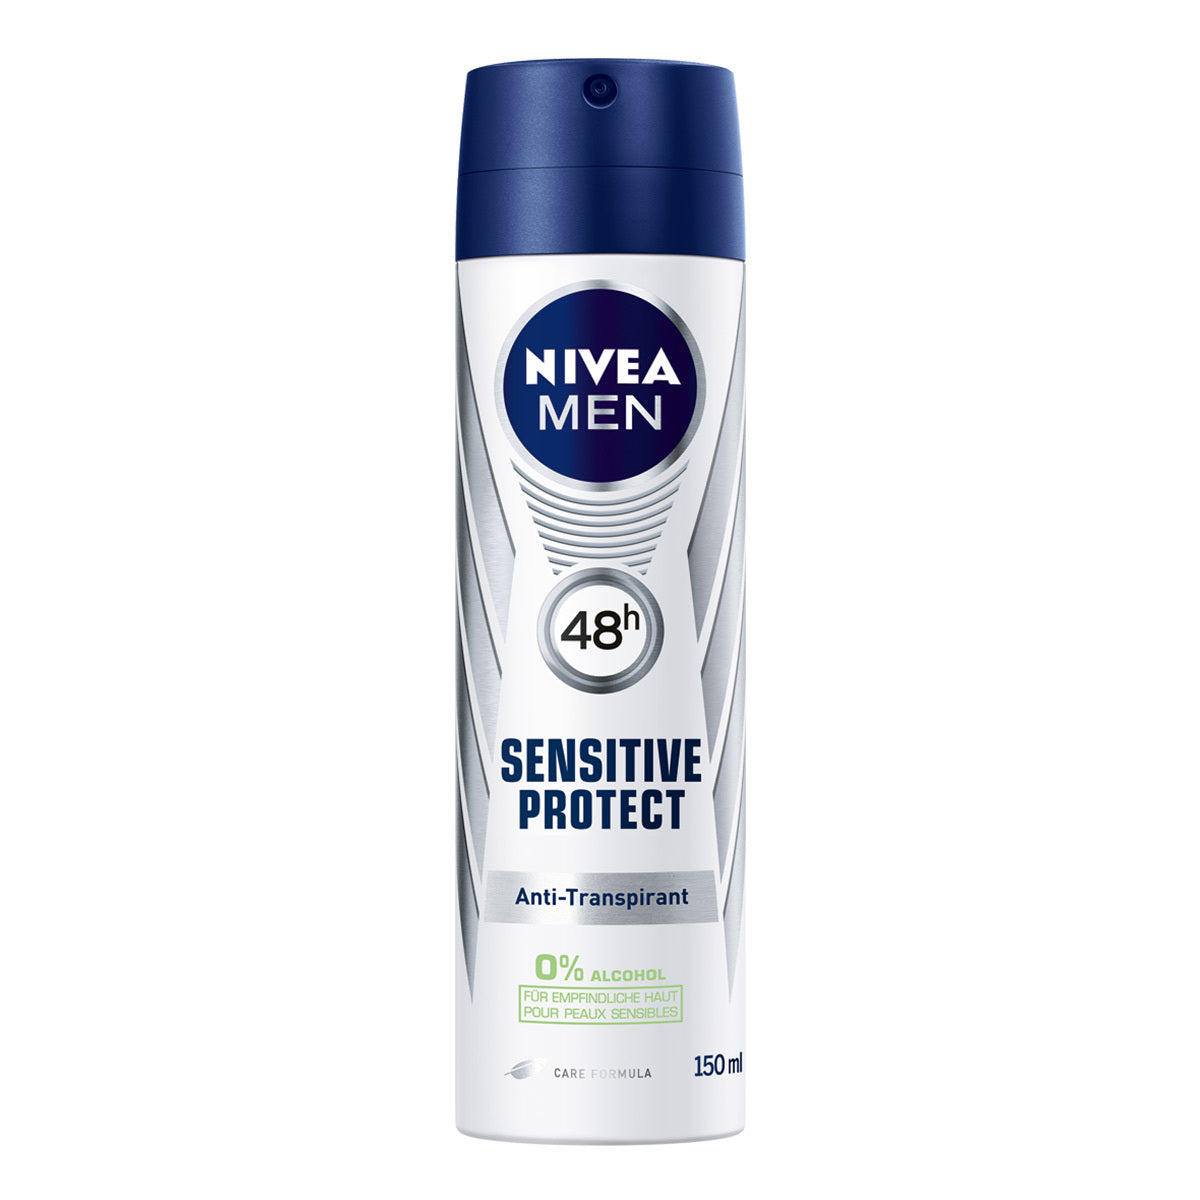 Primary image of Sensitive Protect Deodorant Spray for Men